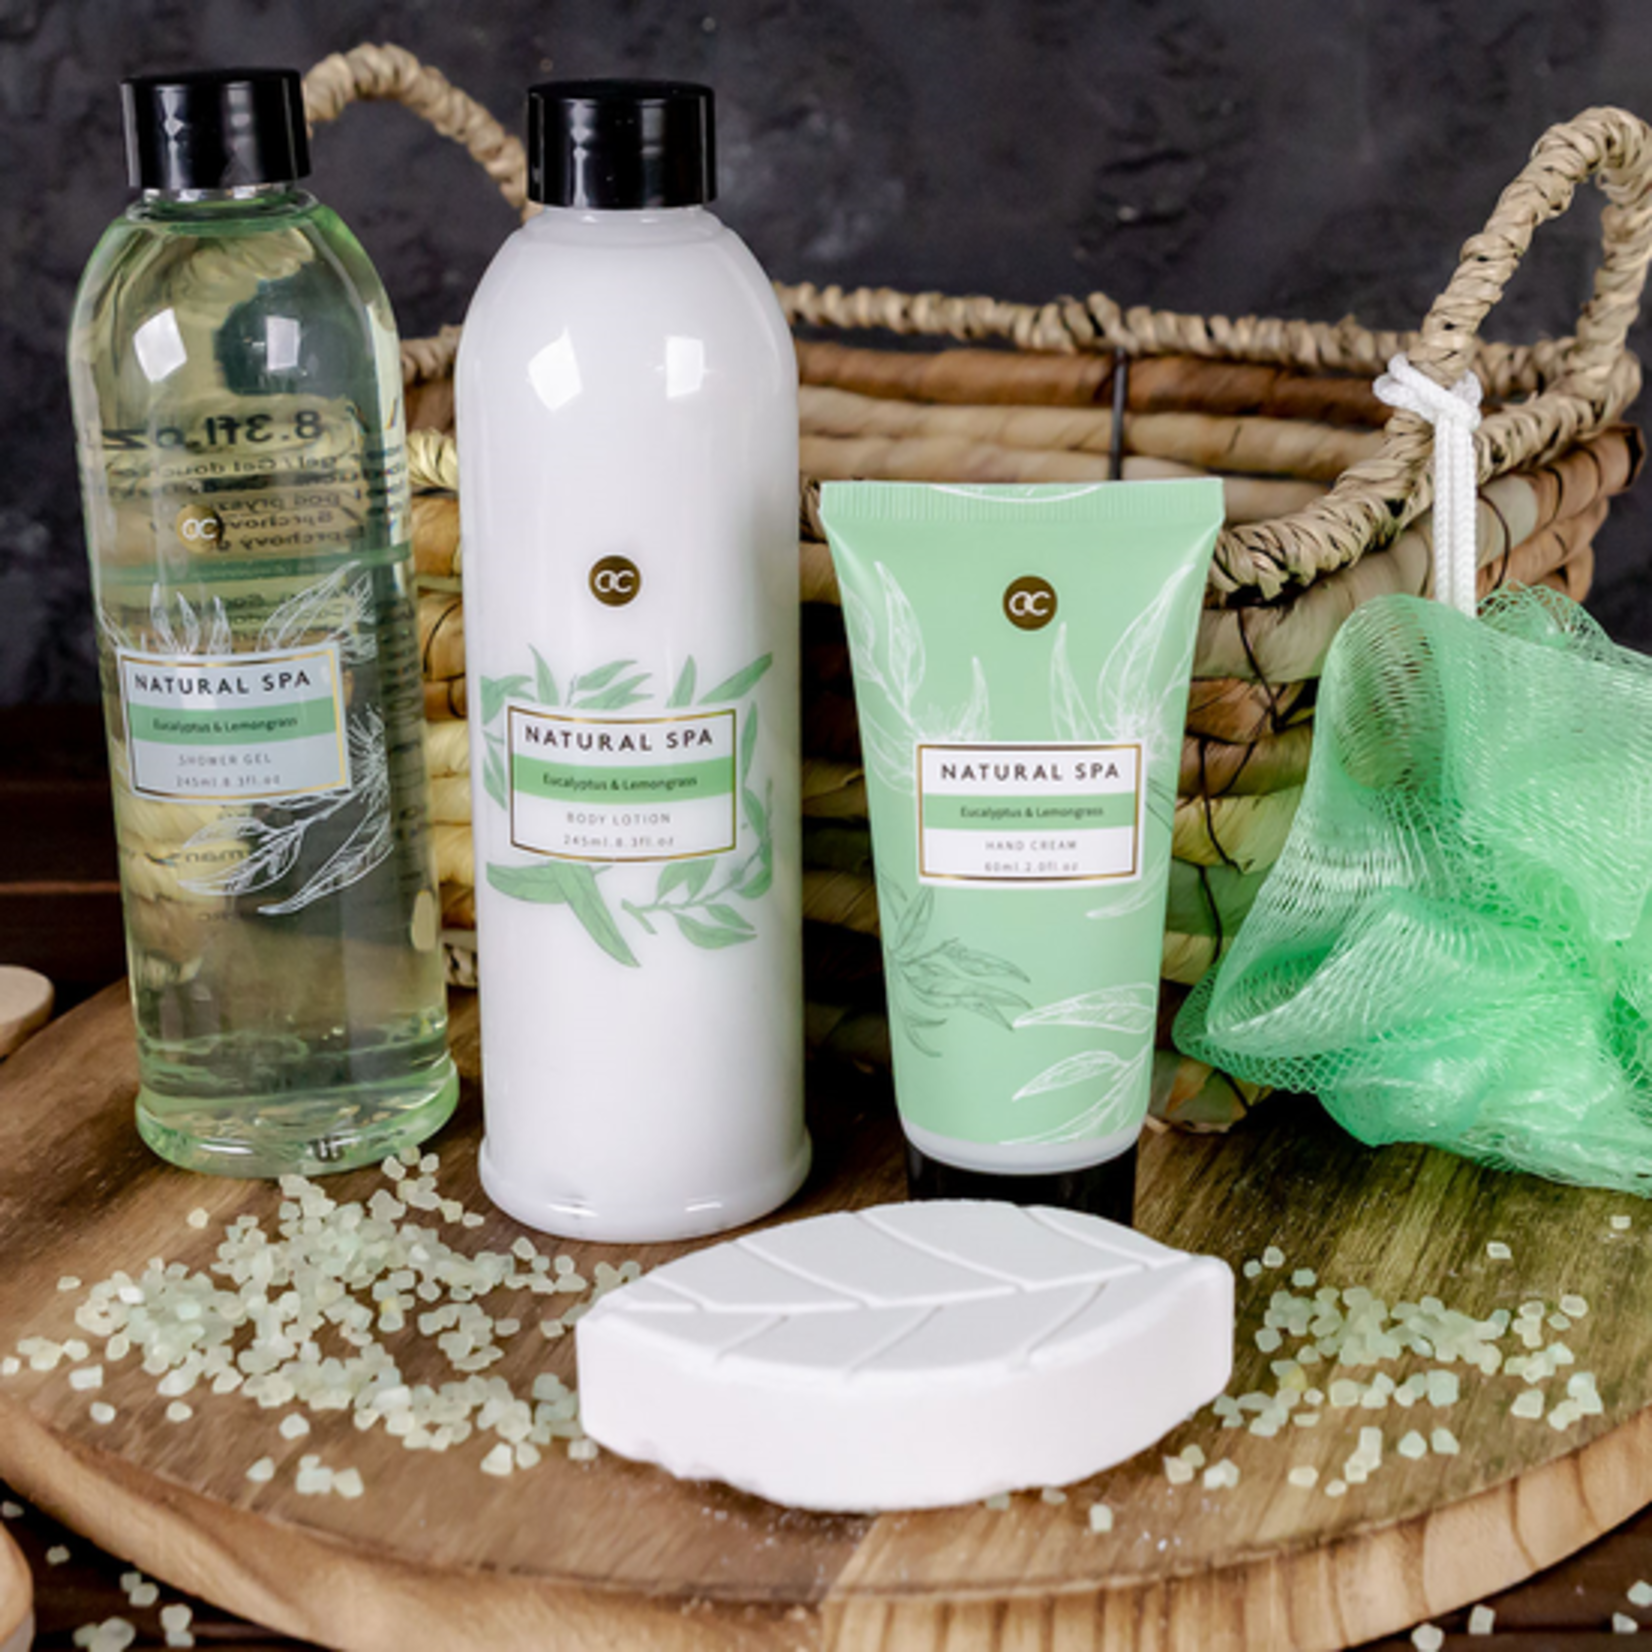 Natural Spa Natural Spa geschenkset vrouwen - In zeegras mand - Eucalyptus & Lemongrass - SPA voor thuis